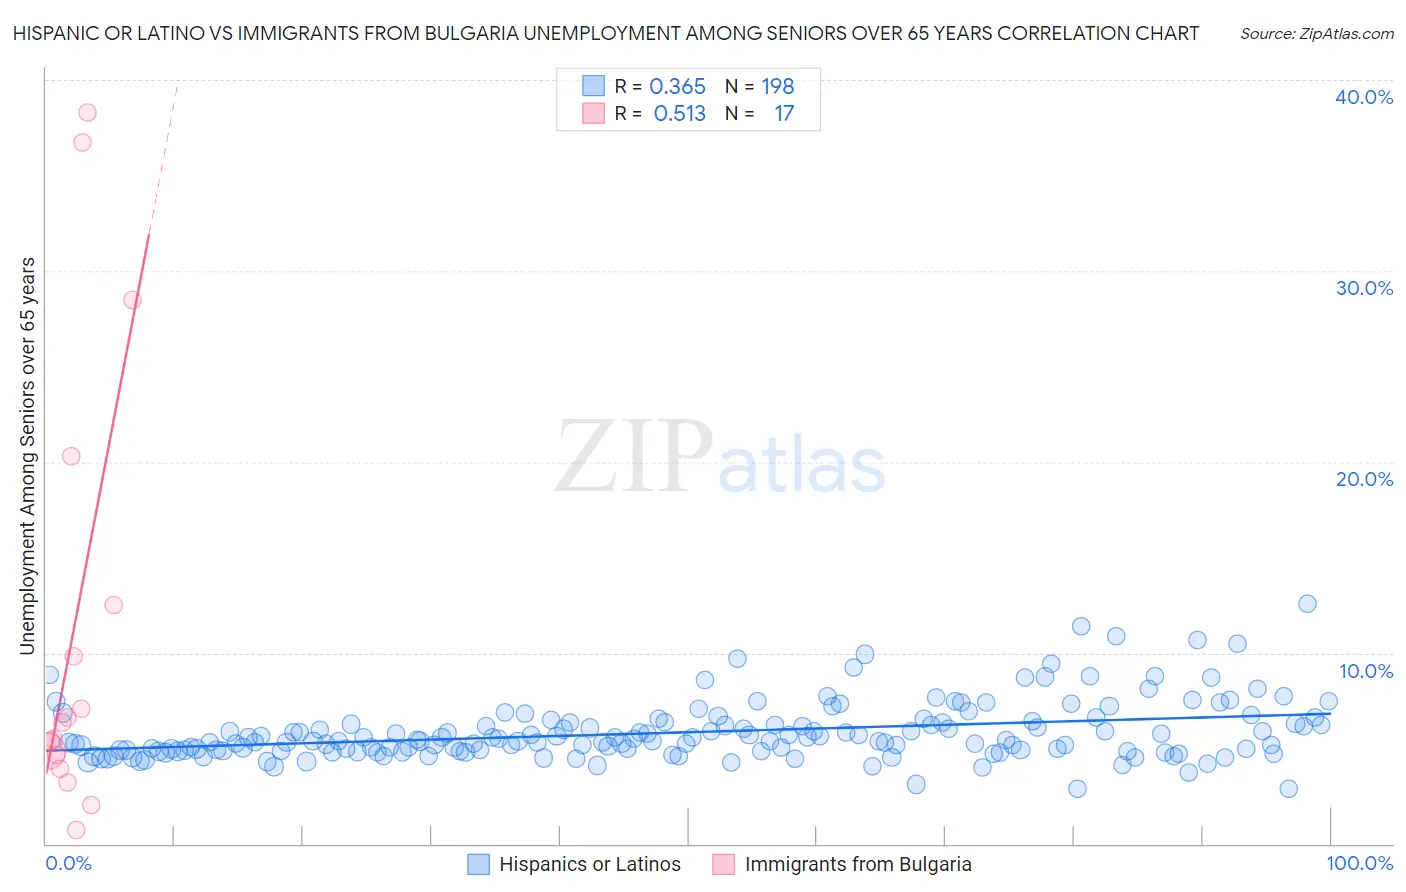 Hispanic or Latino vs Immigrants from Bulgaria Unemployment Among Seniors over 65 years